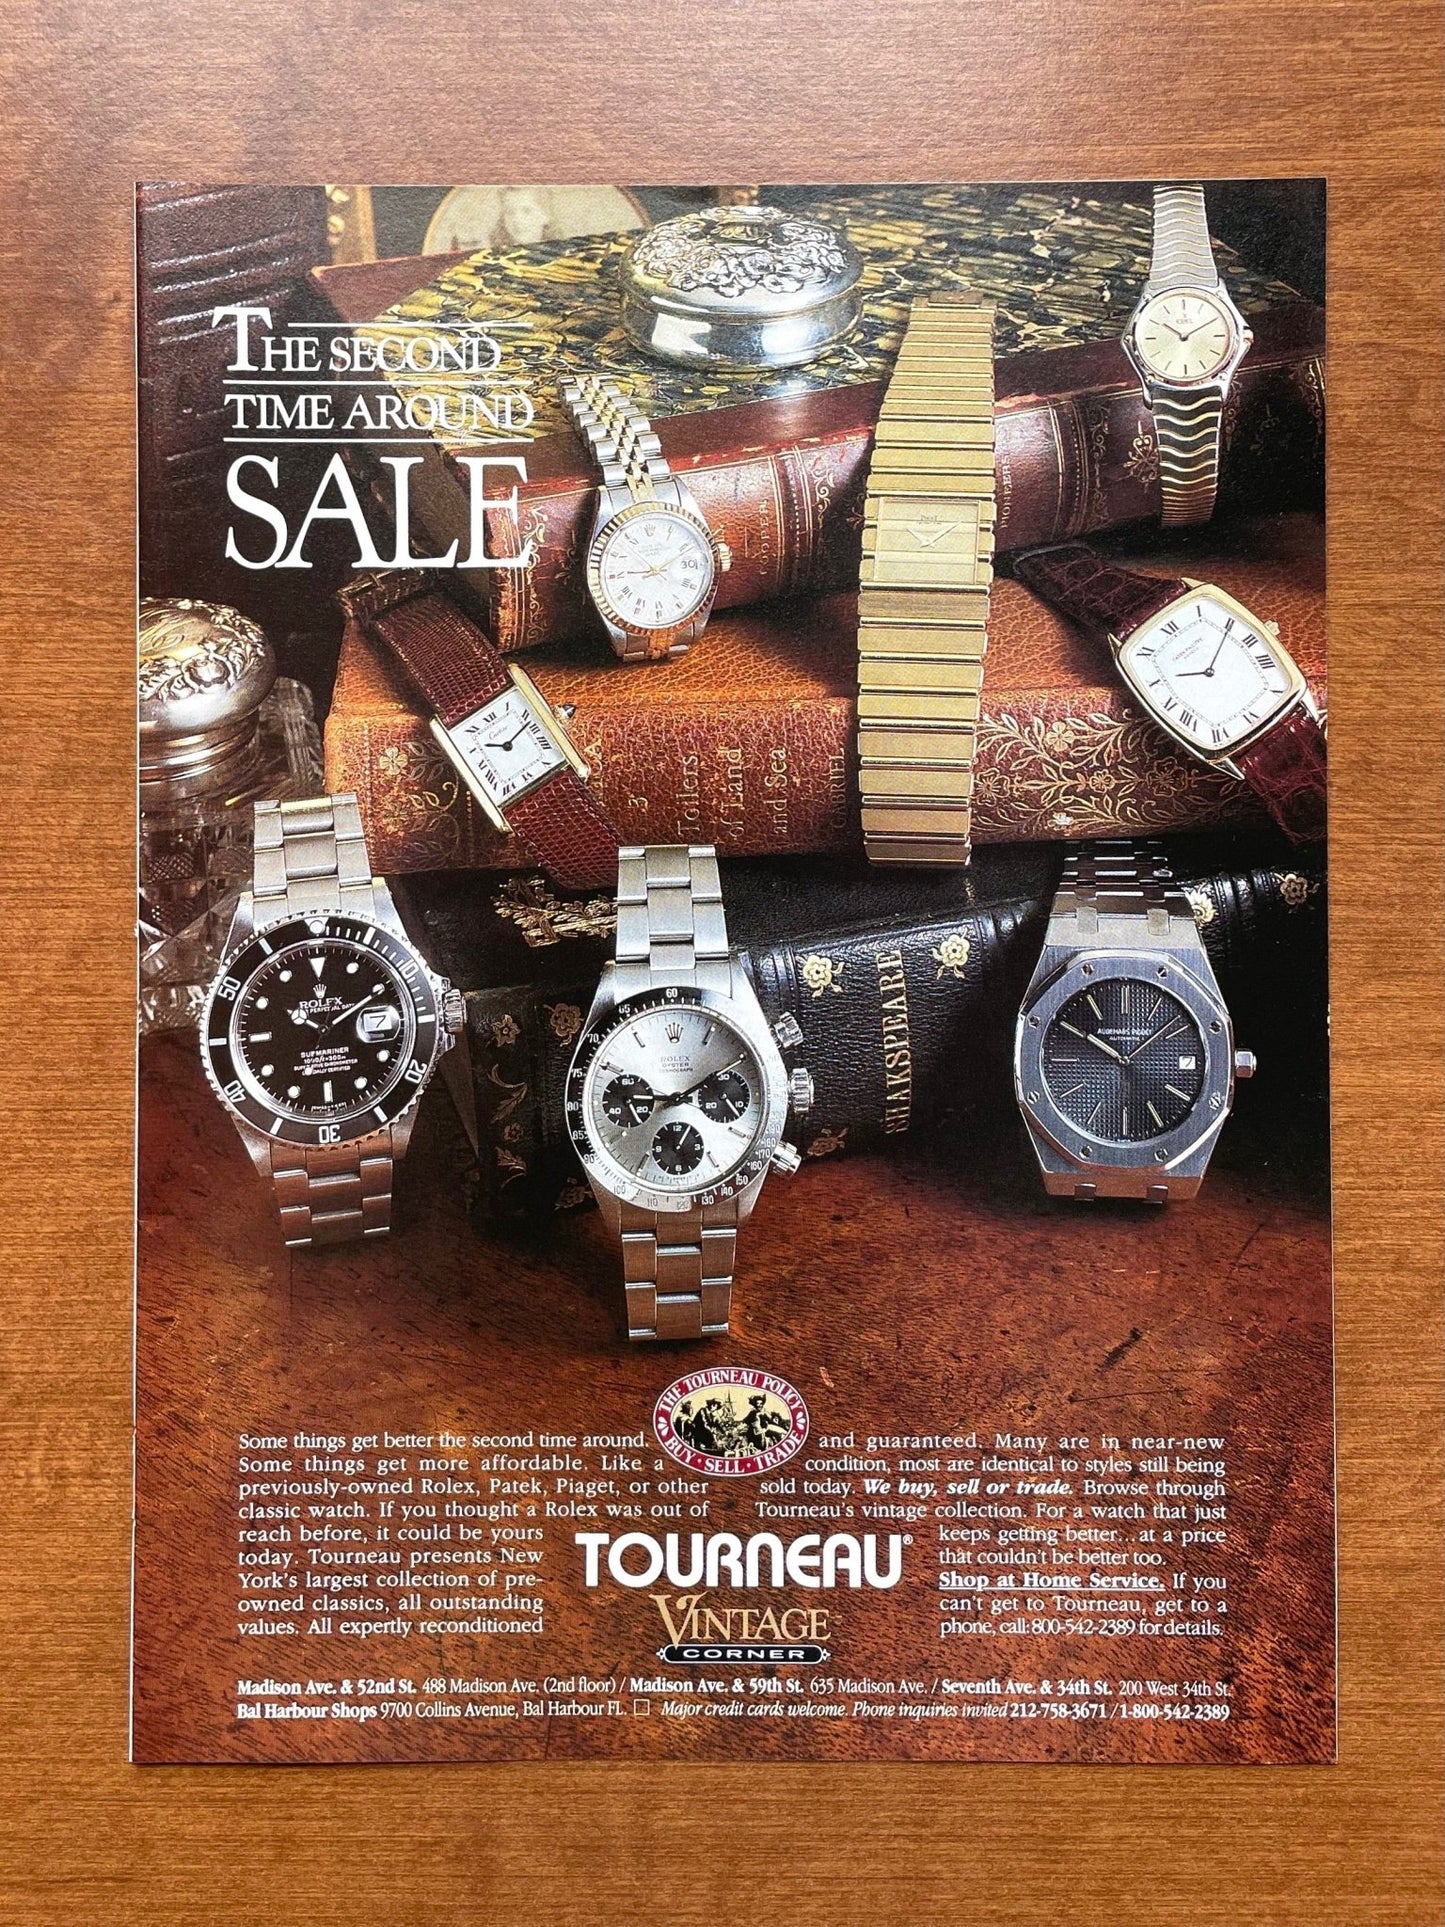 1992 Tourneau ad with vintage Rolex Daytona Ref. 6265